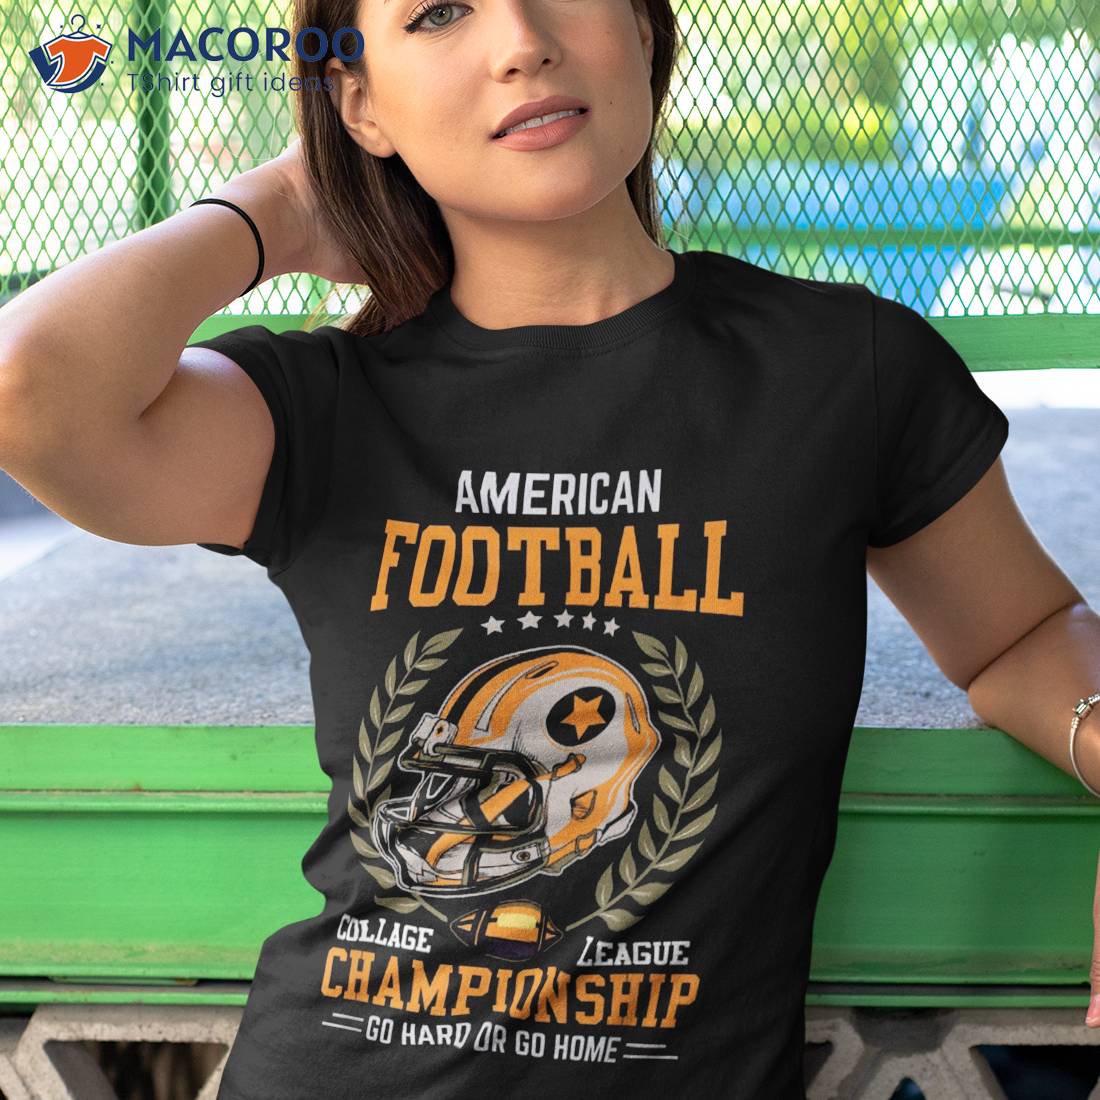 Championship T Shirt Design Ideas